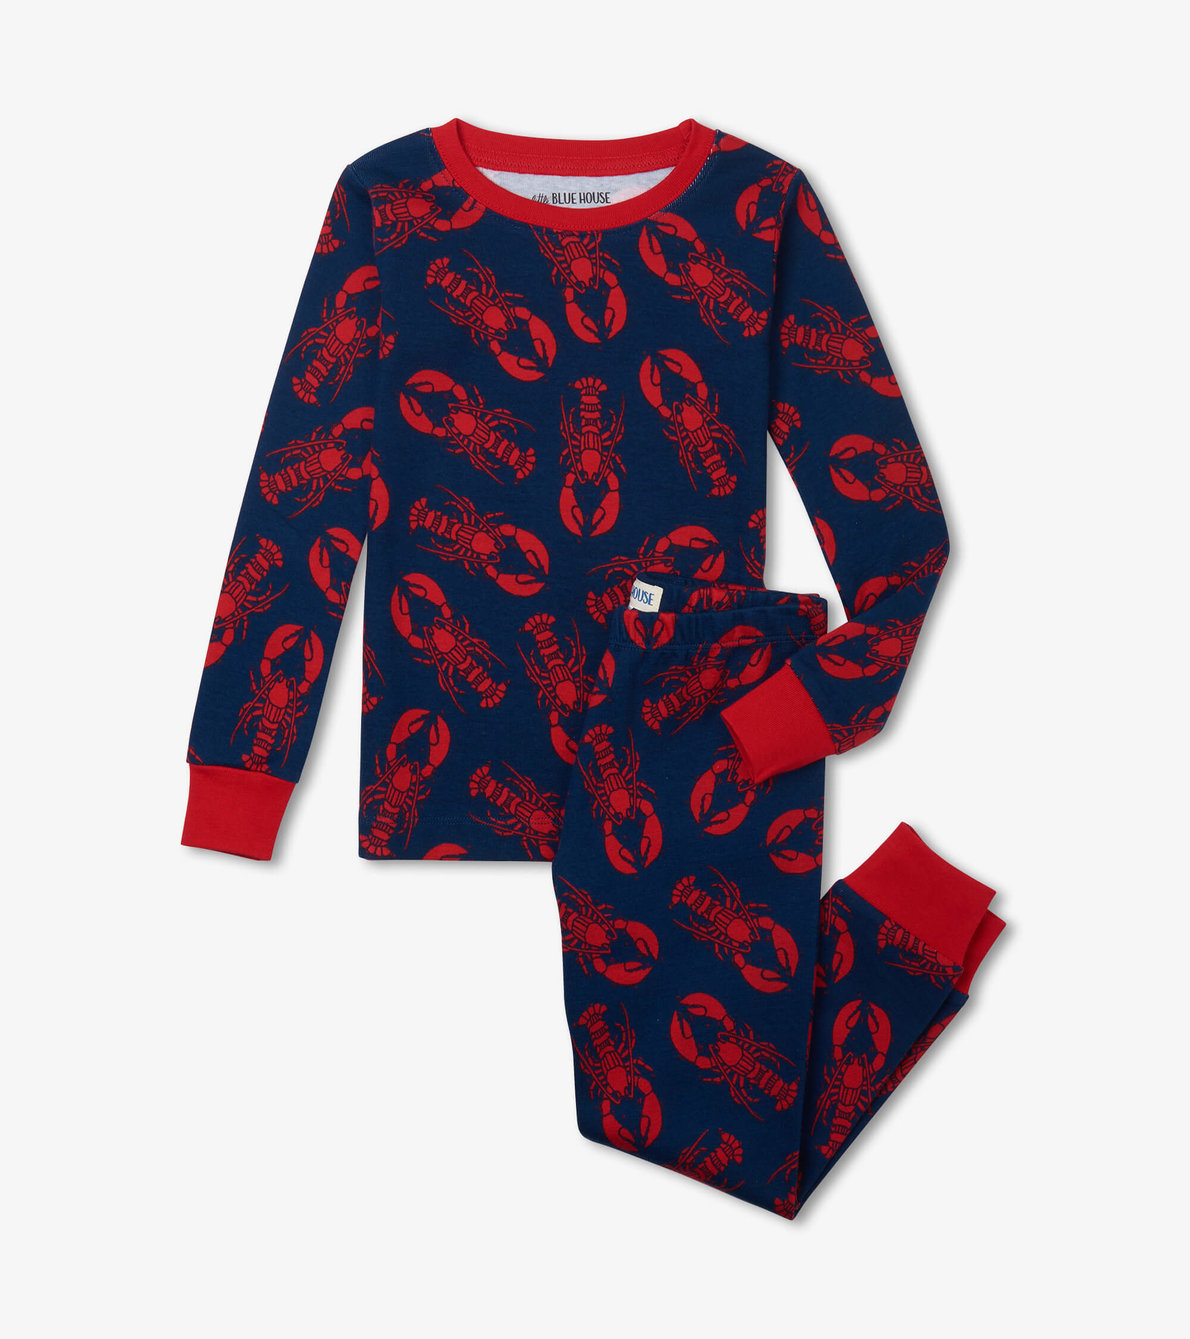 View larger image of Navy Lobster Kids Pajama Set